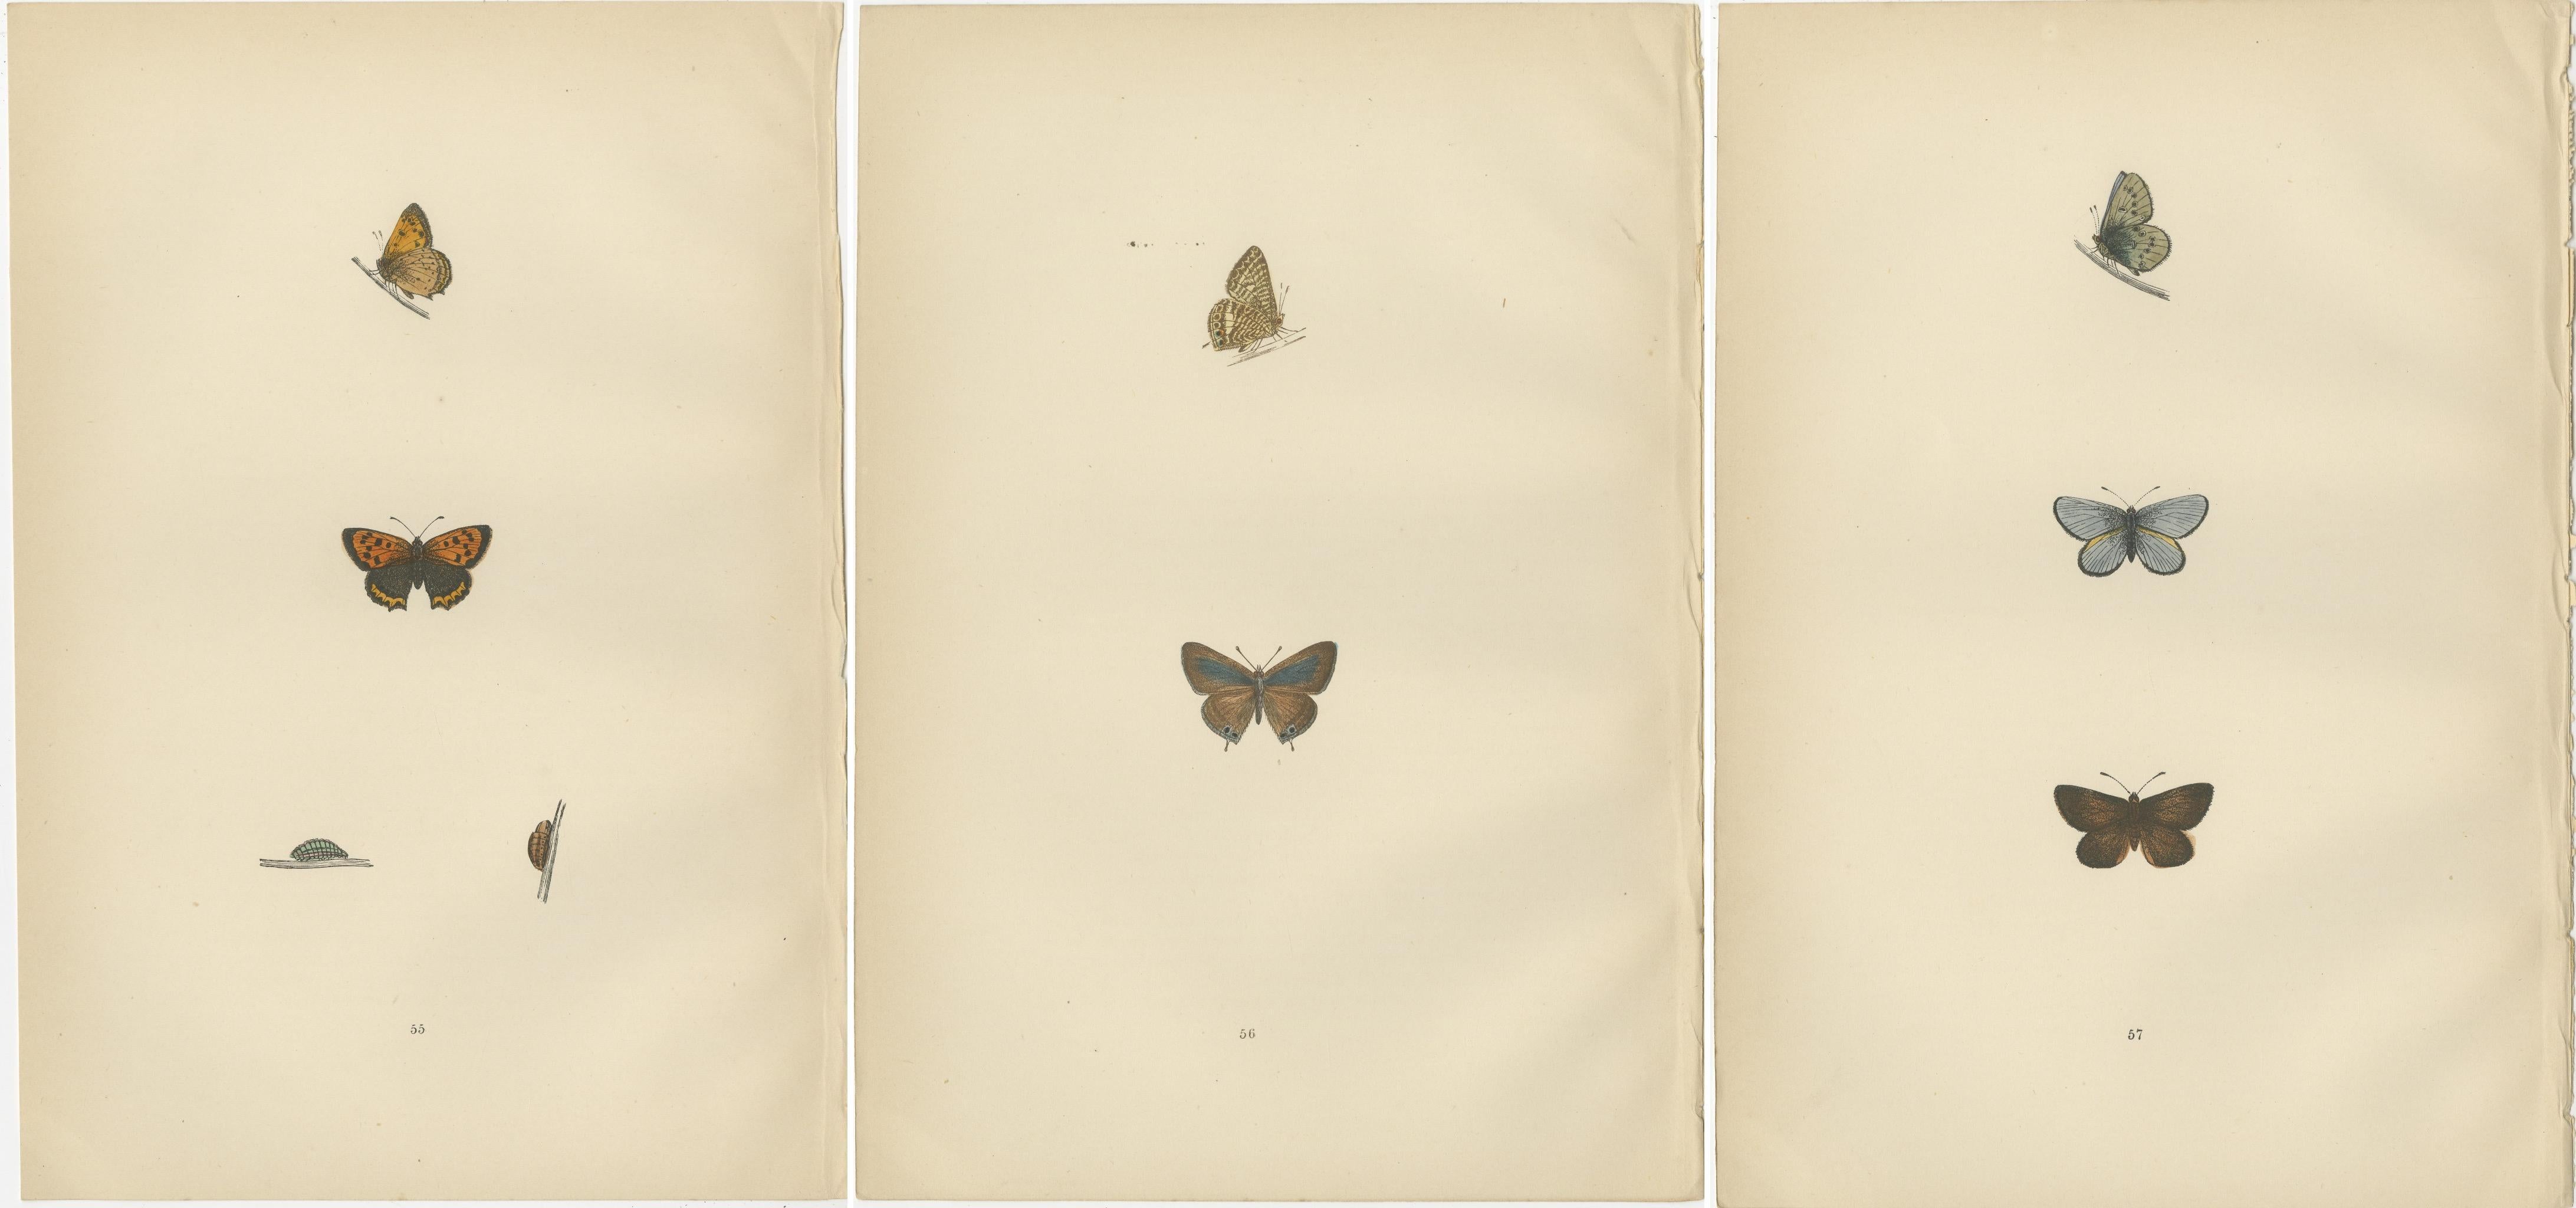 Paper Chromatic Splendor: The Copper, Argus, and Blue of Morris's 1890 Lepidoptera For Sale